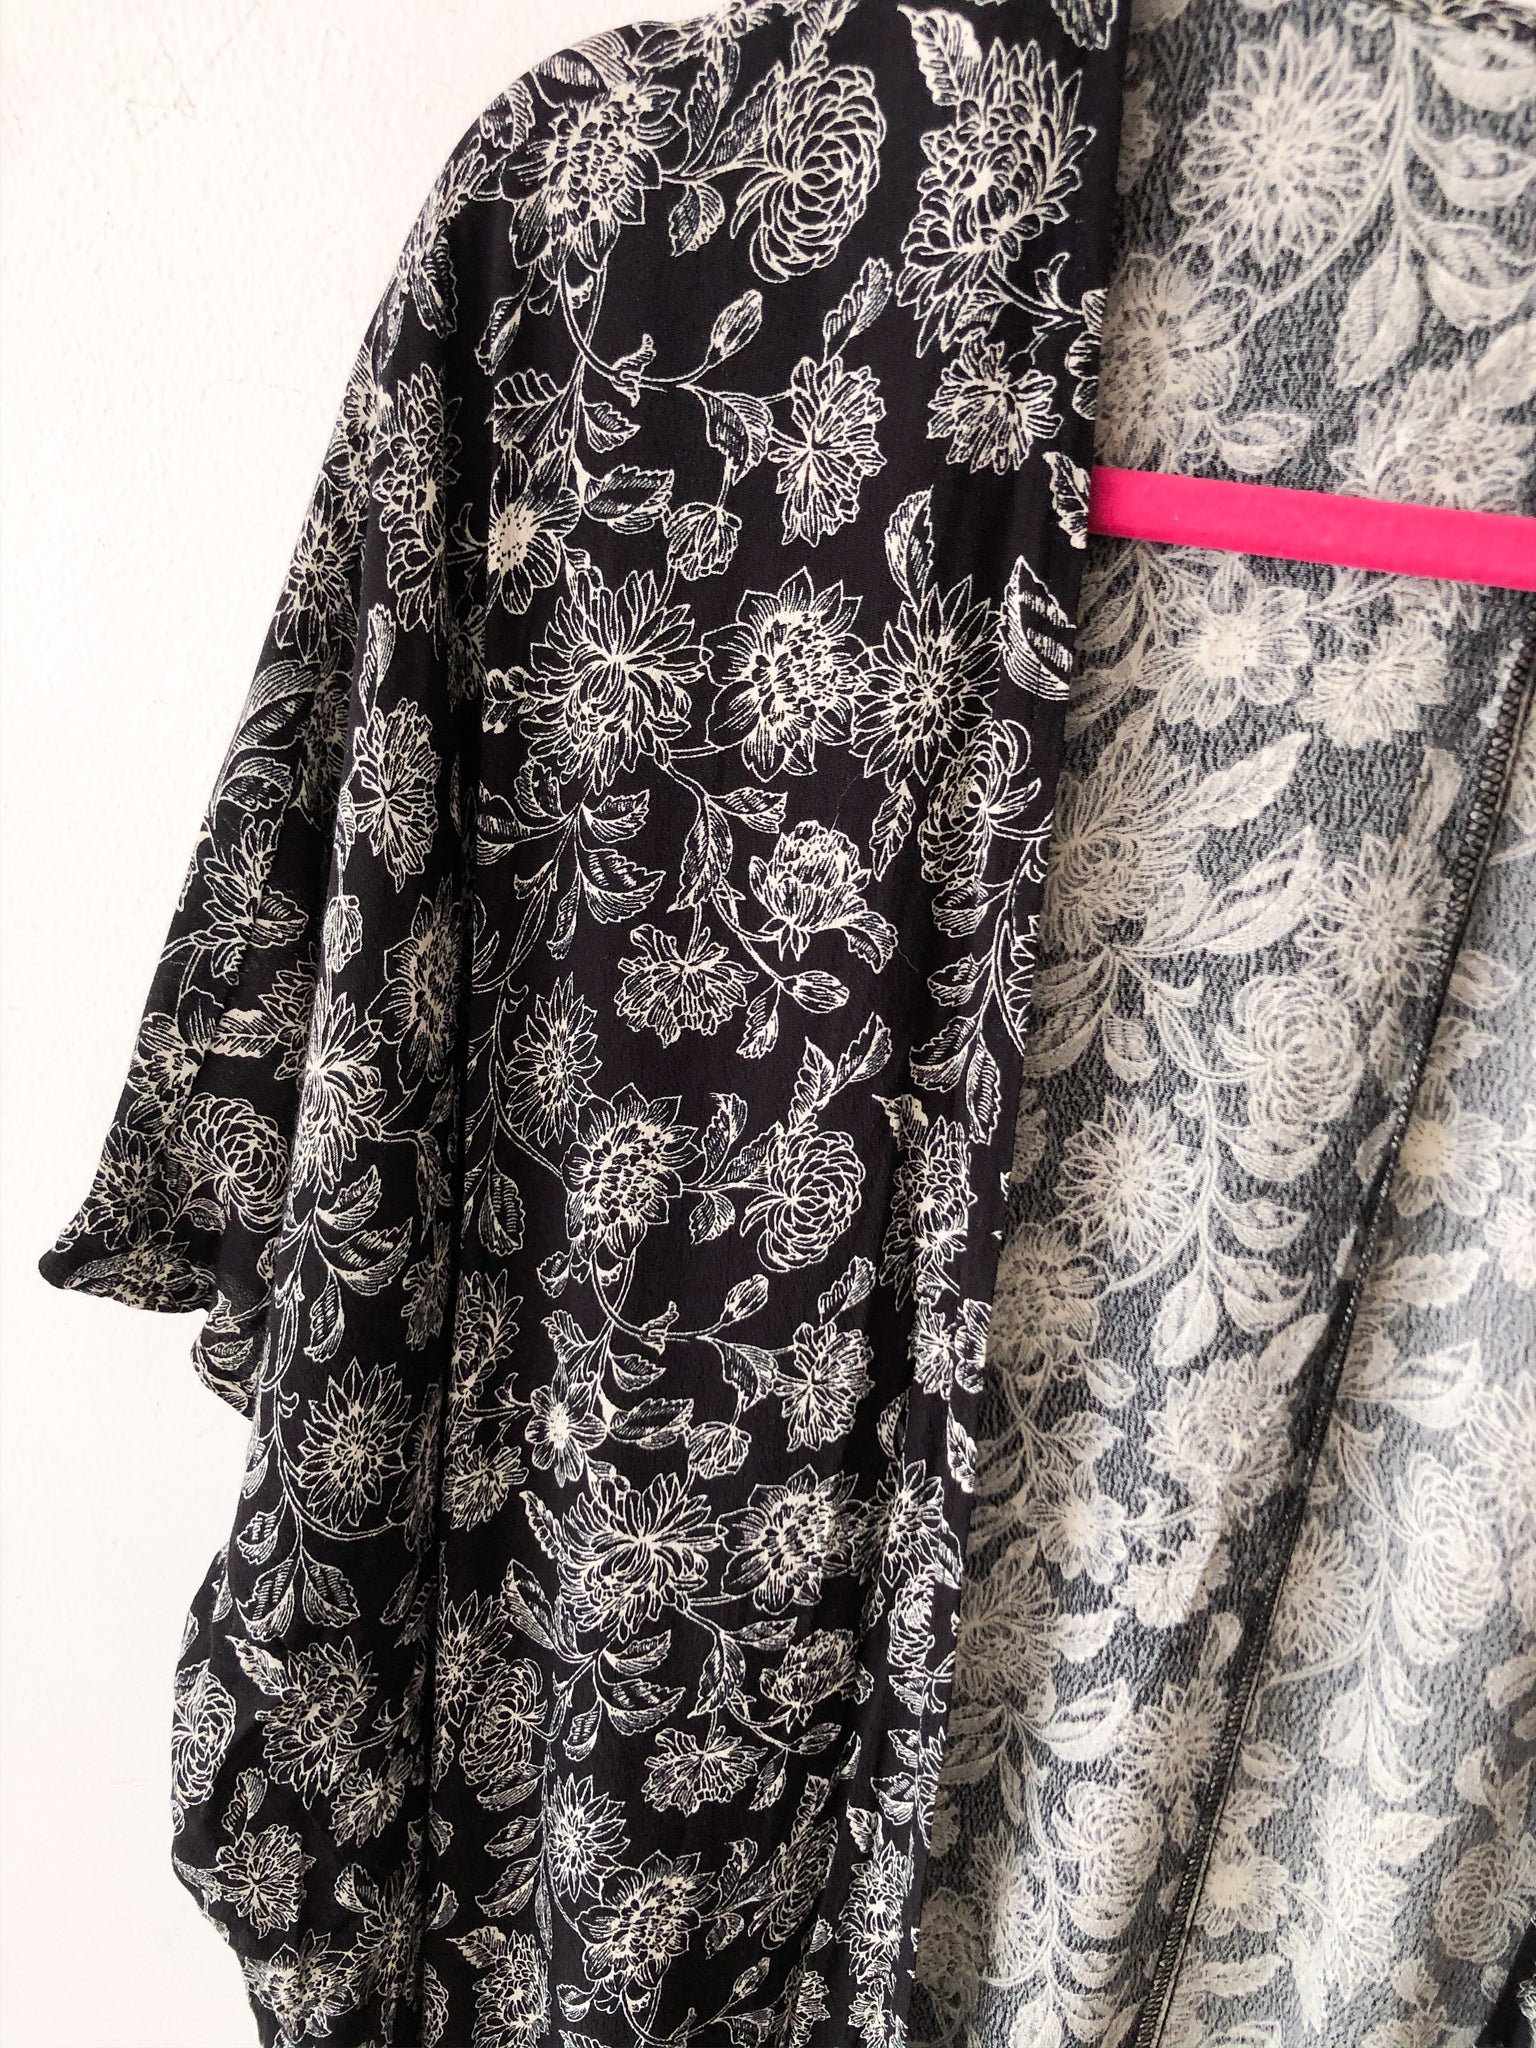 Kimono black and white/ Pre-loved